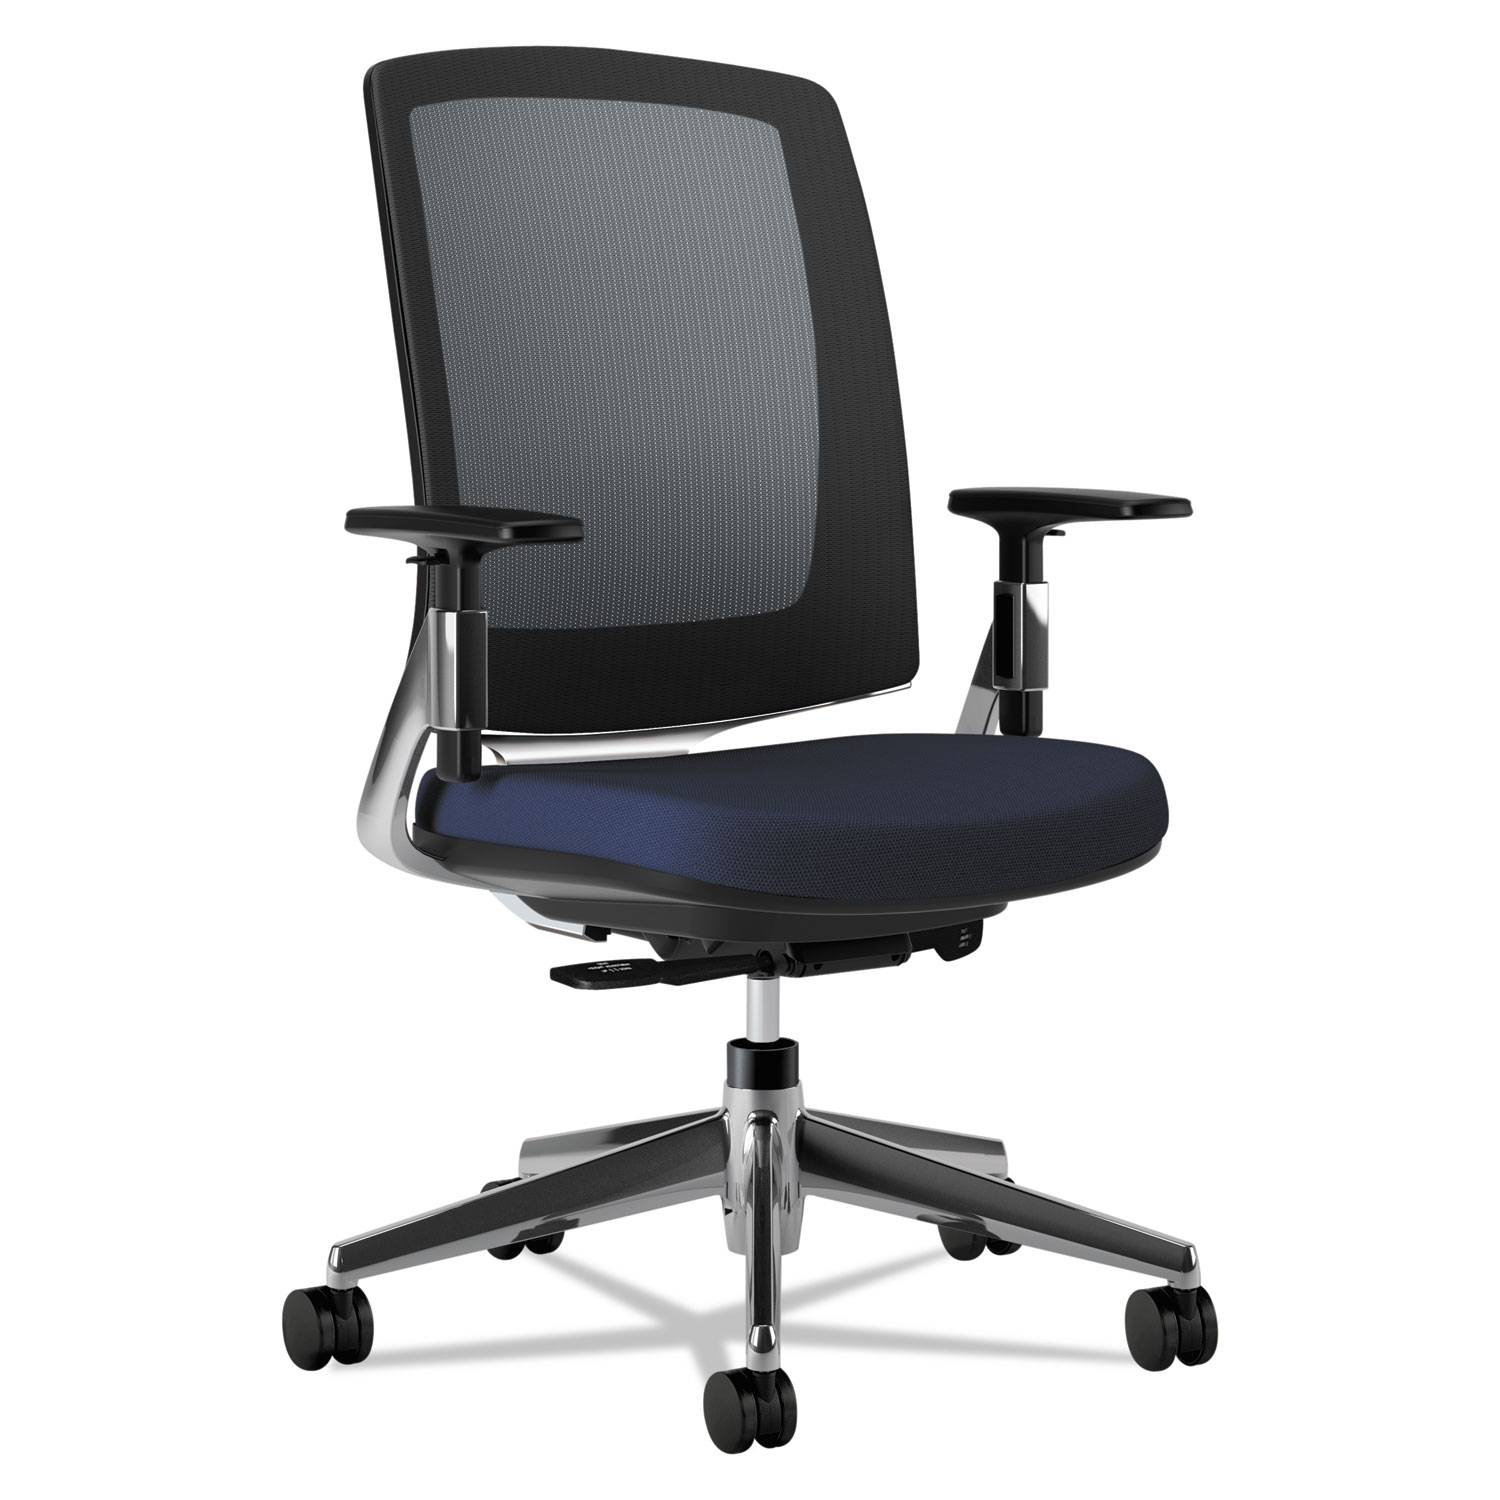  HON H2283.VA90.PA Lota Series Mesh Mid-Back Work Chair, Supports up to 250 lbs., Navy Seat/Navy Back, Polished Aluminum Base (HON2283VA90PA) 